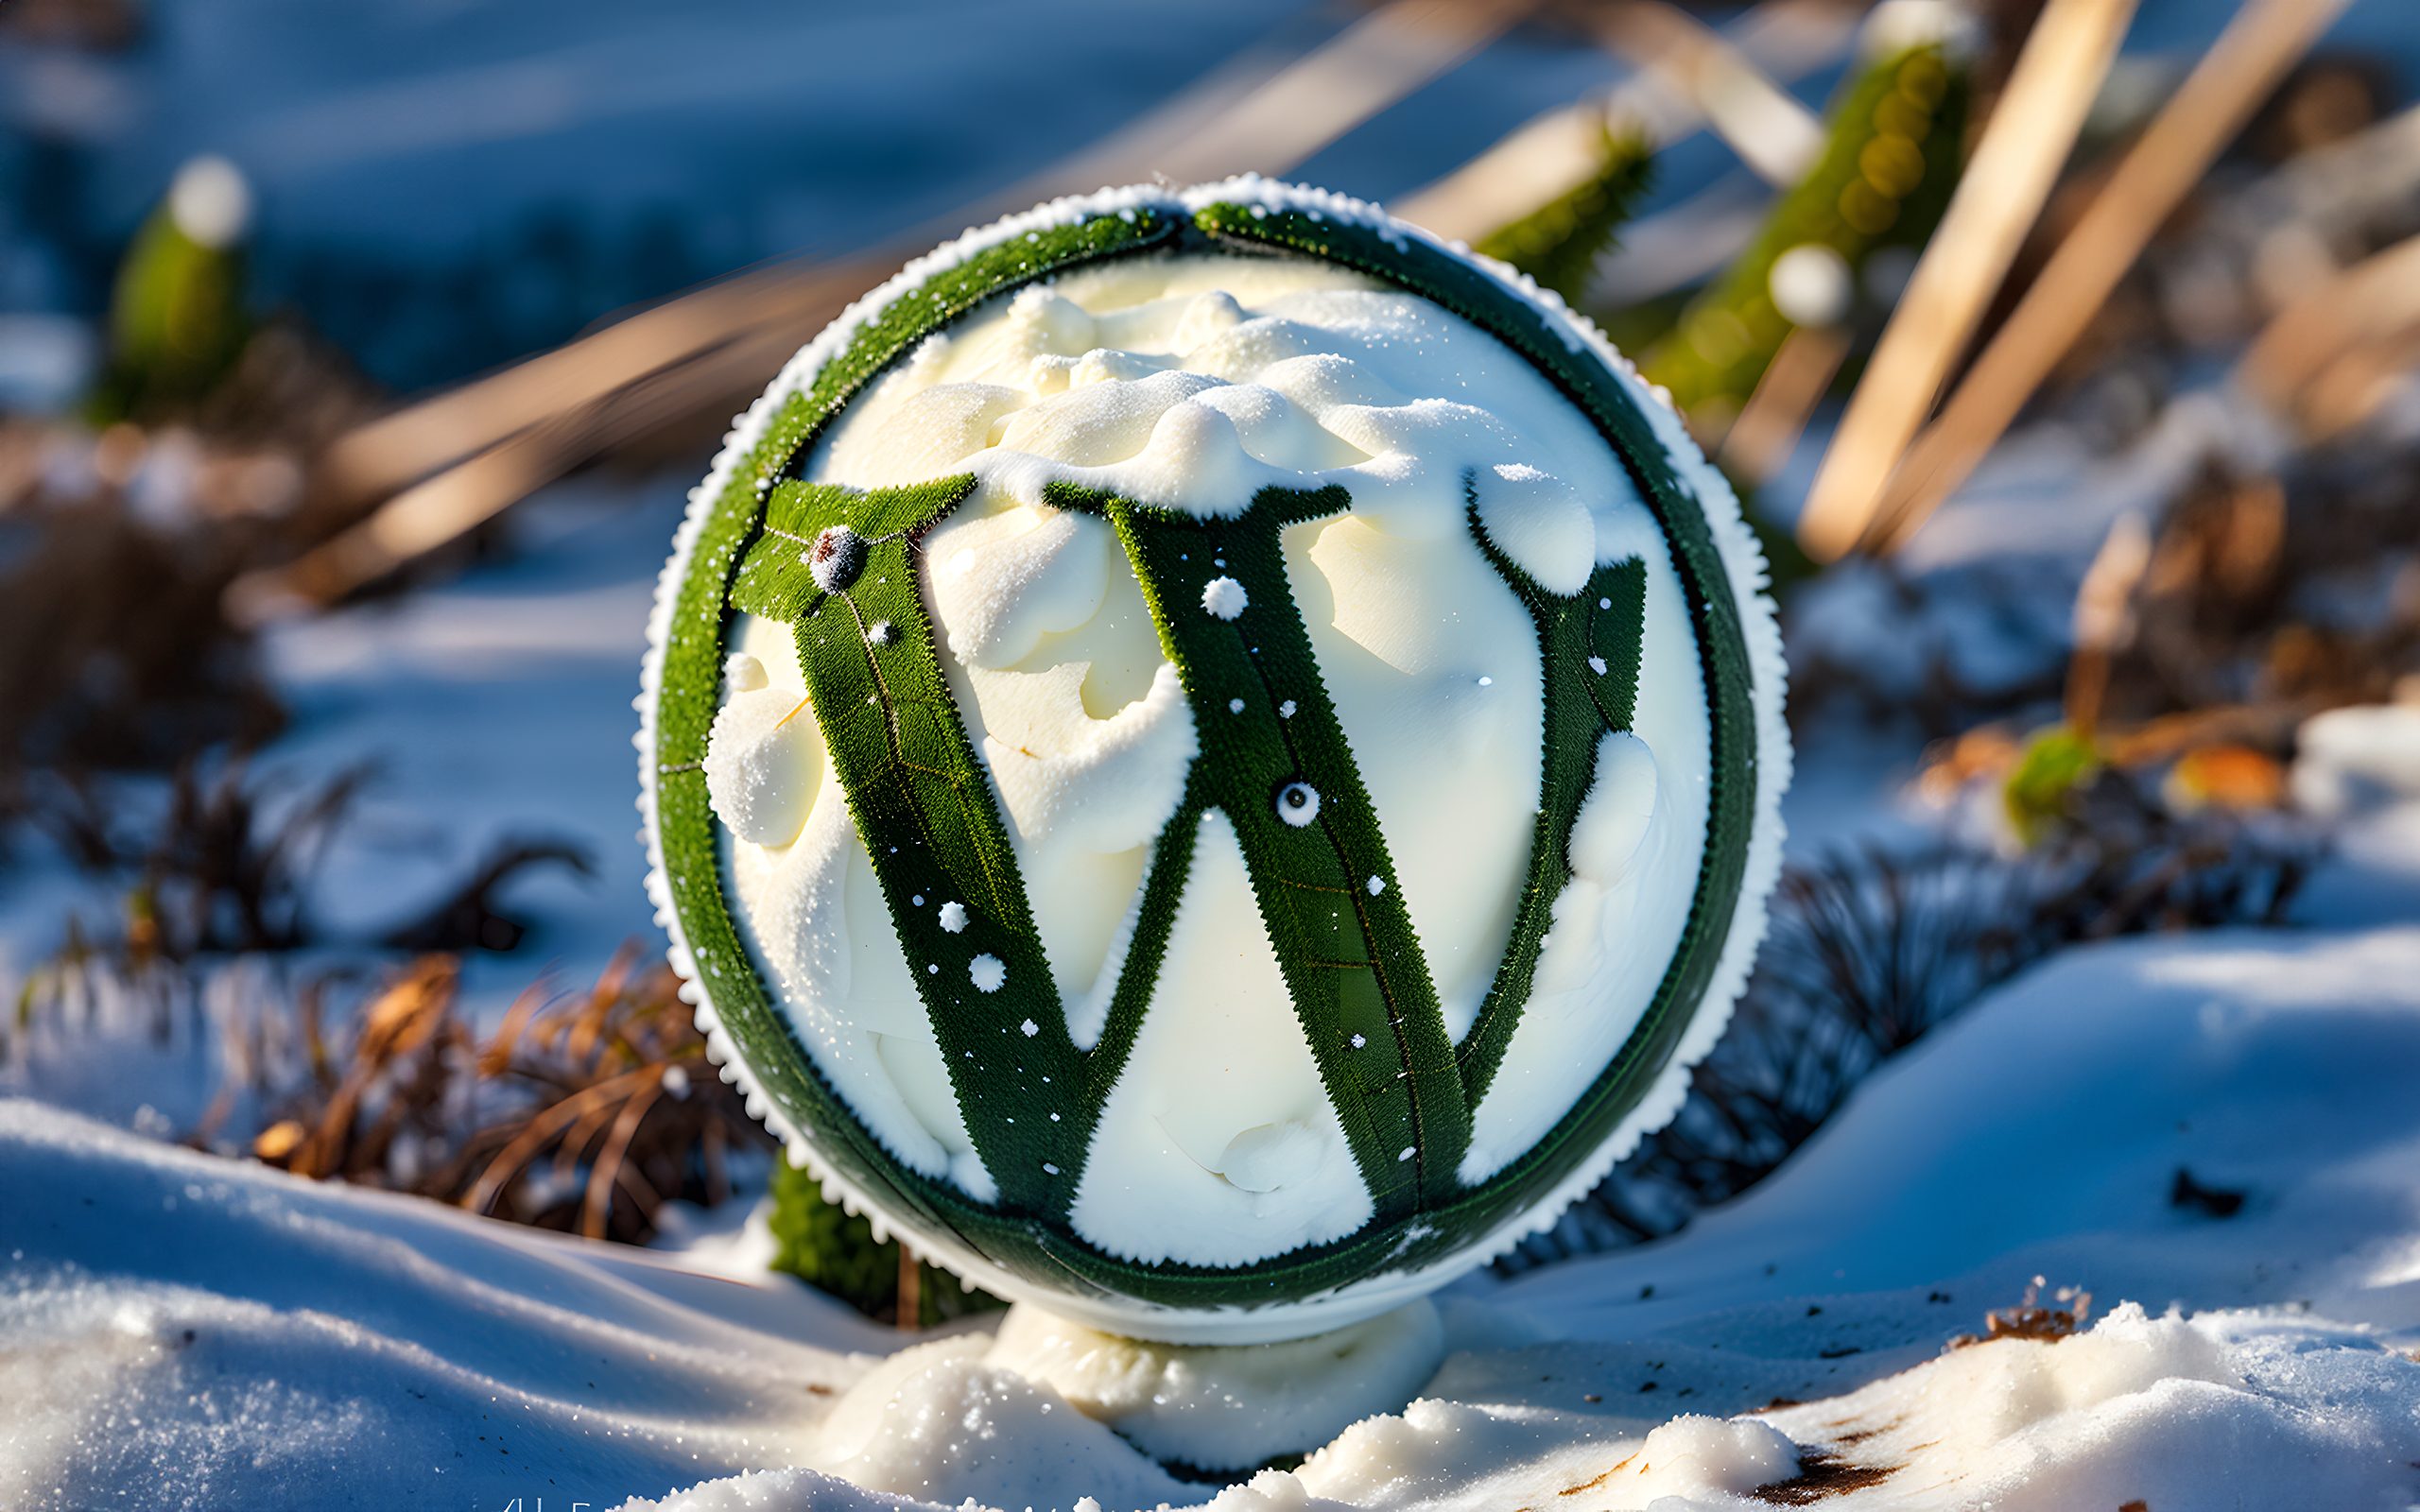 Christmas winter WordPress Wallpaper HD, 4k, 
WordPress logo snowball